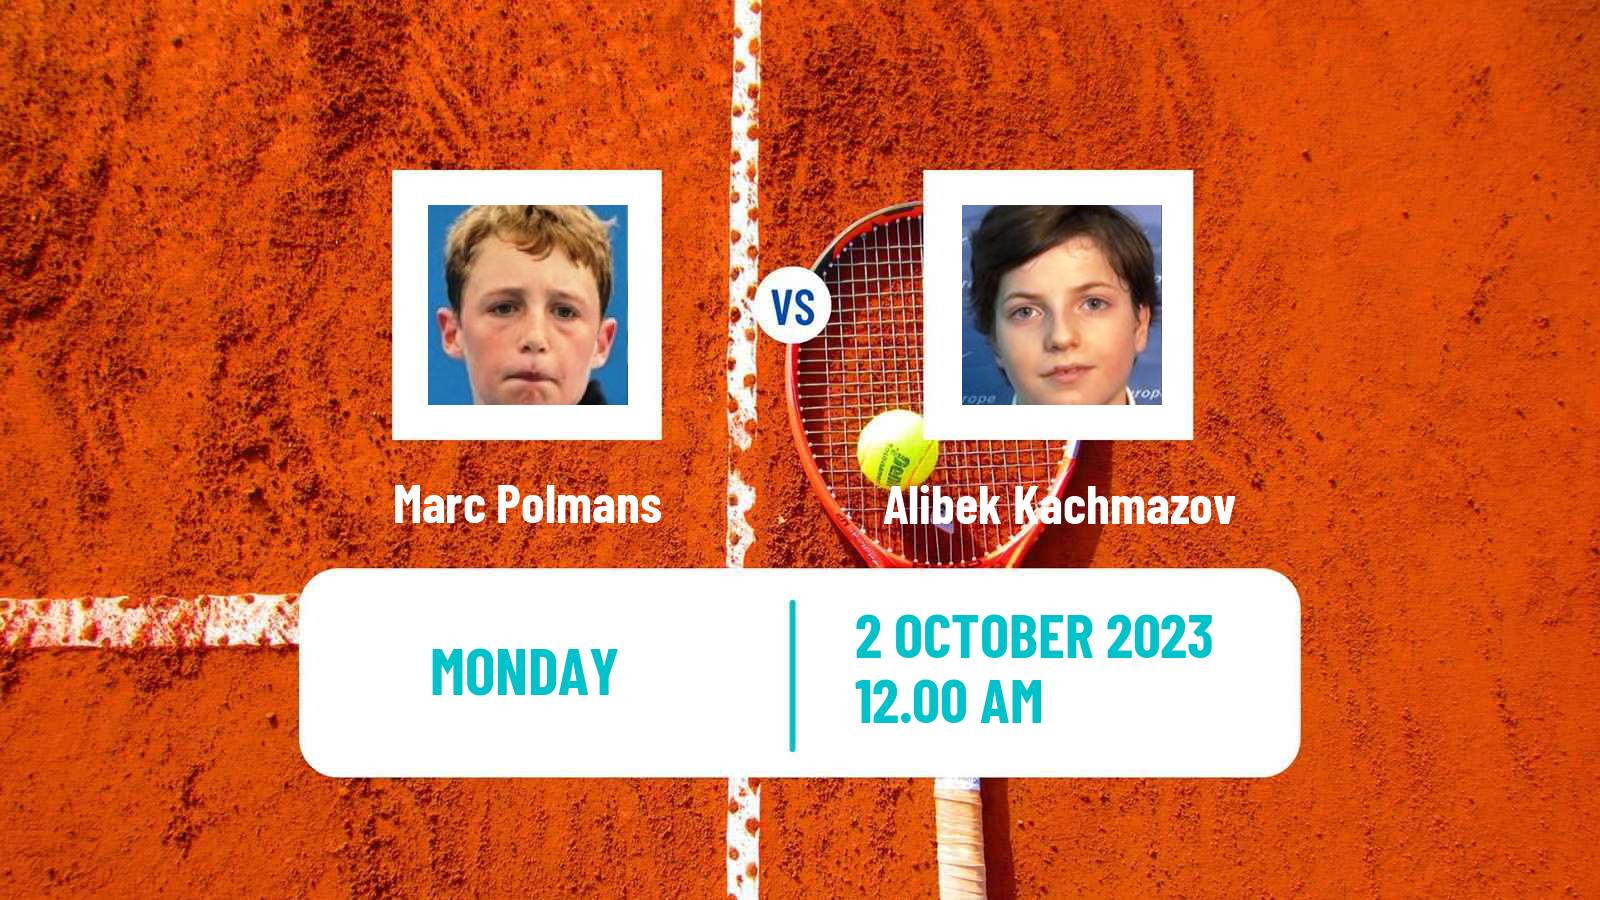 Tennis ATP Shanghai Marc Polmans - Alibek Kachmazov